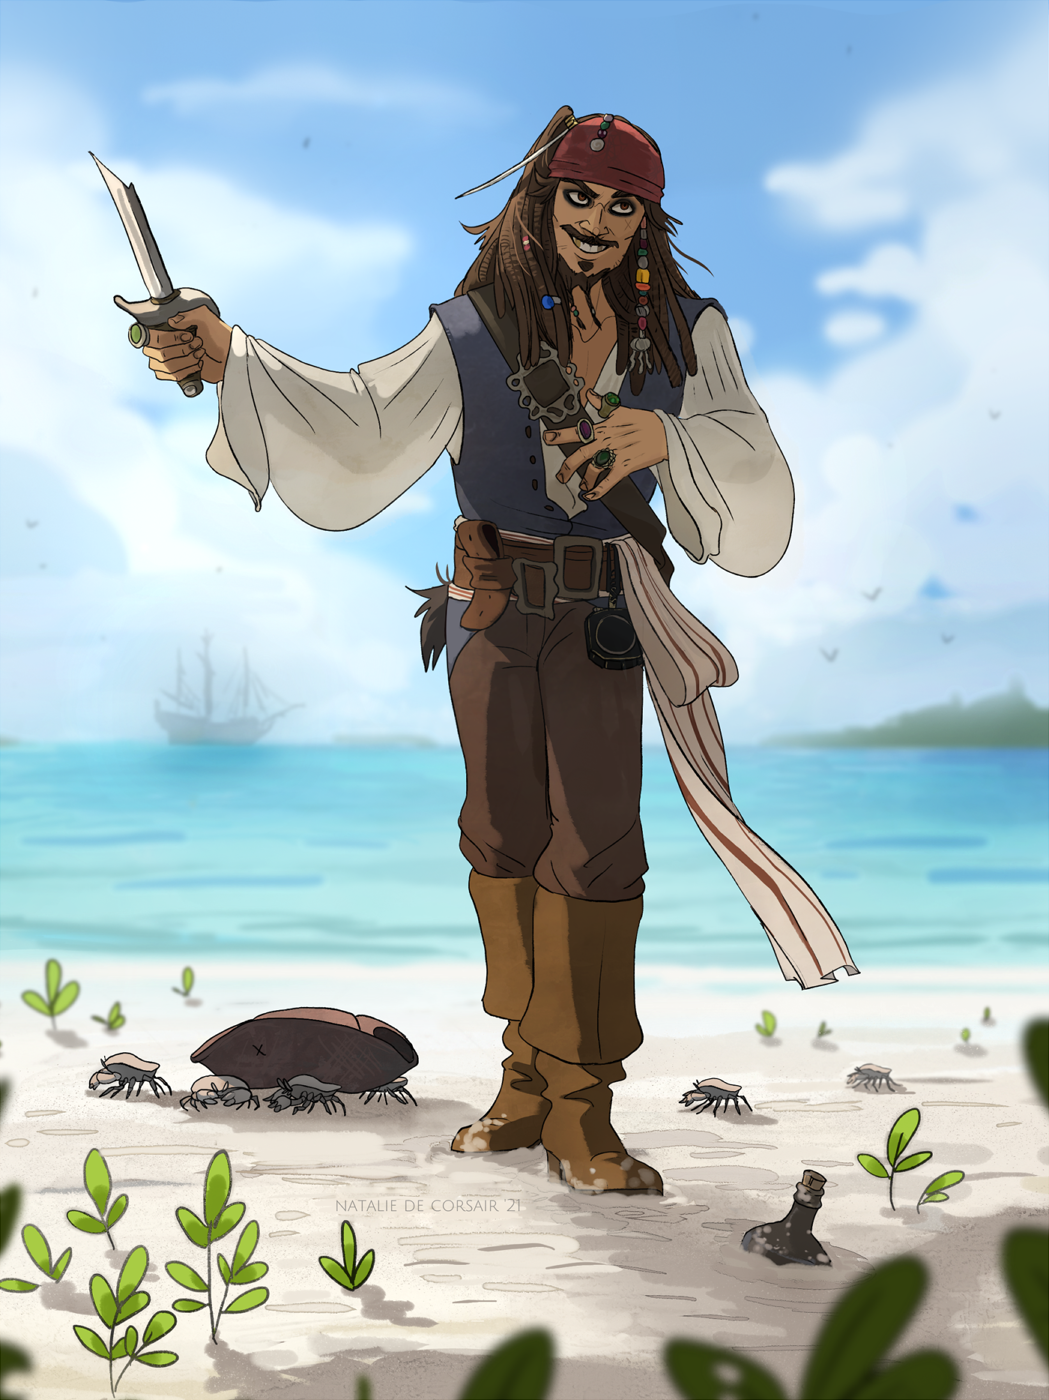 I'm Capt. Jack Sparrow, savvy?